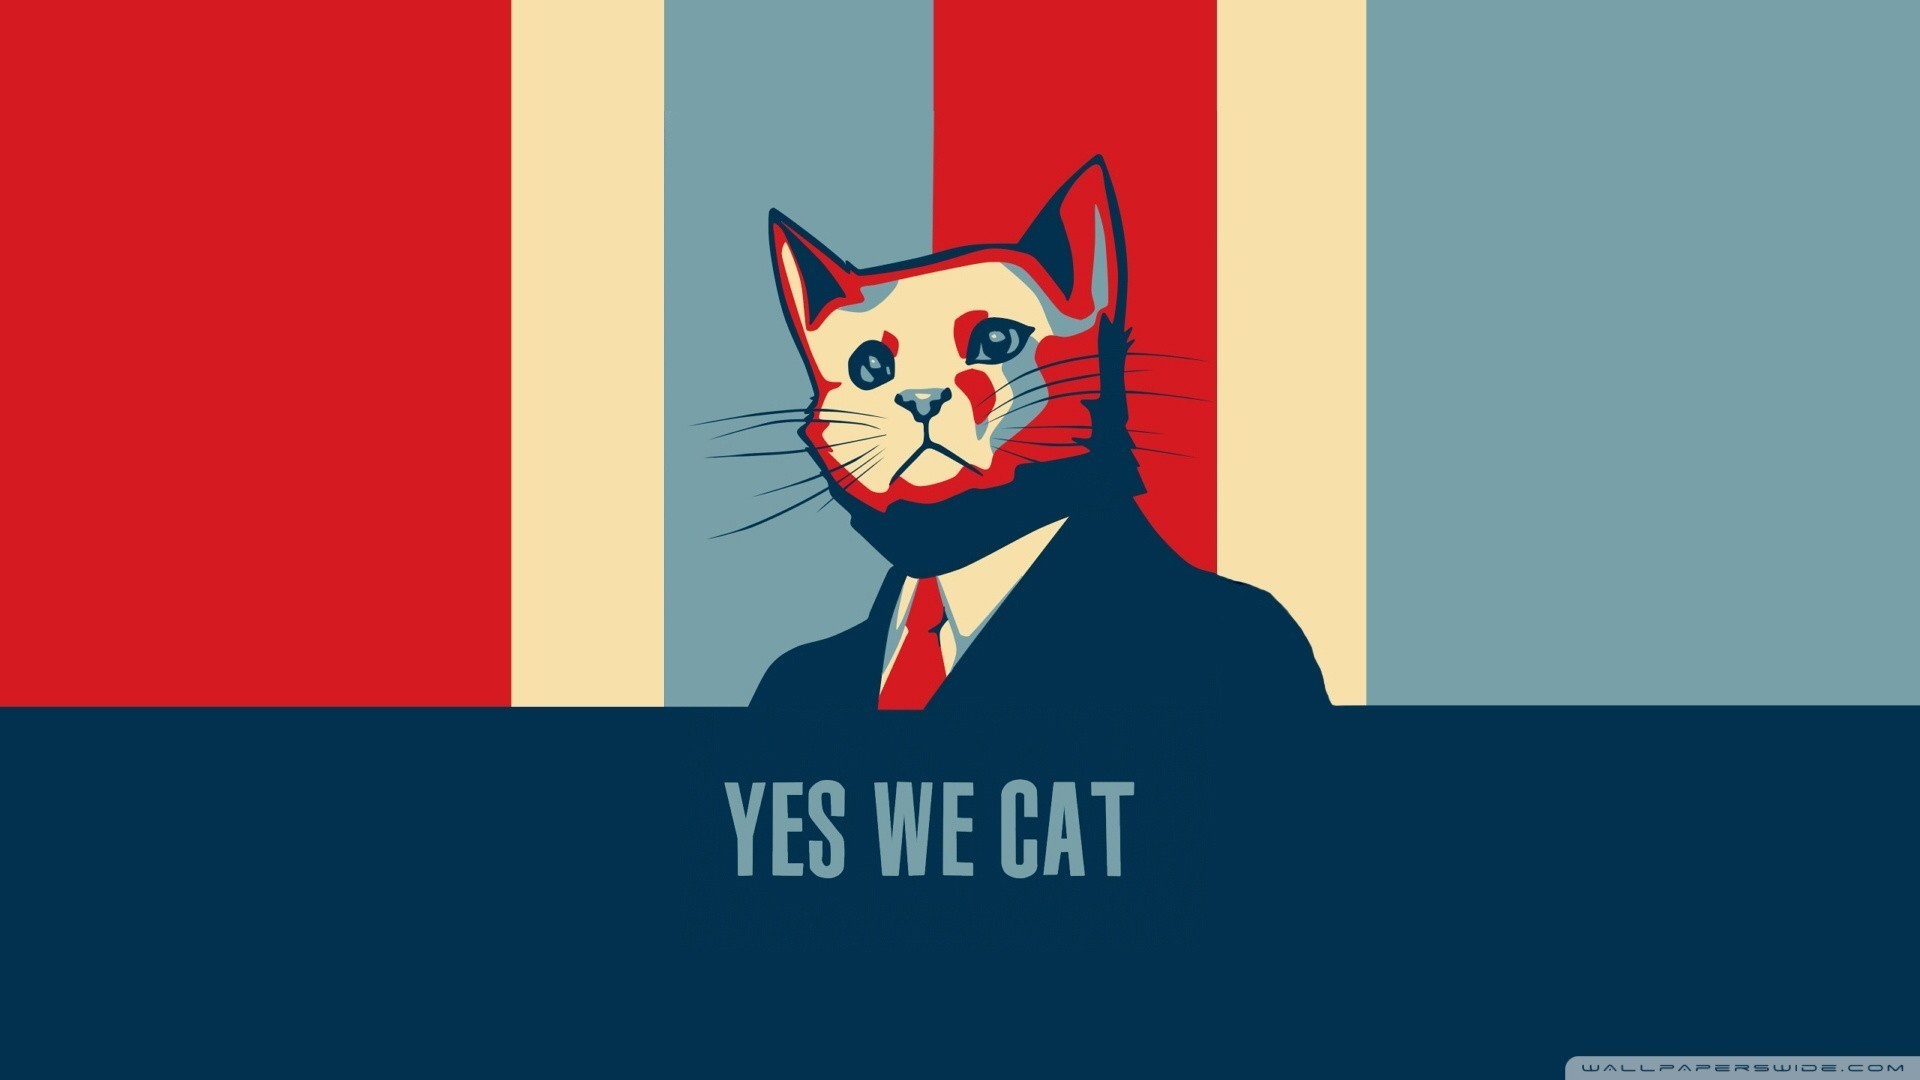 1920x1080  cat barack obama humor hope posters wallpaper and background JPG  97 kB